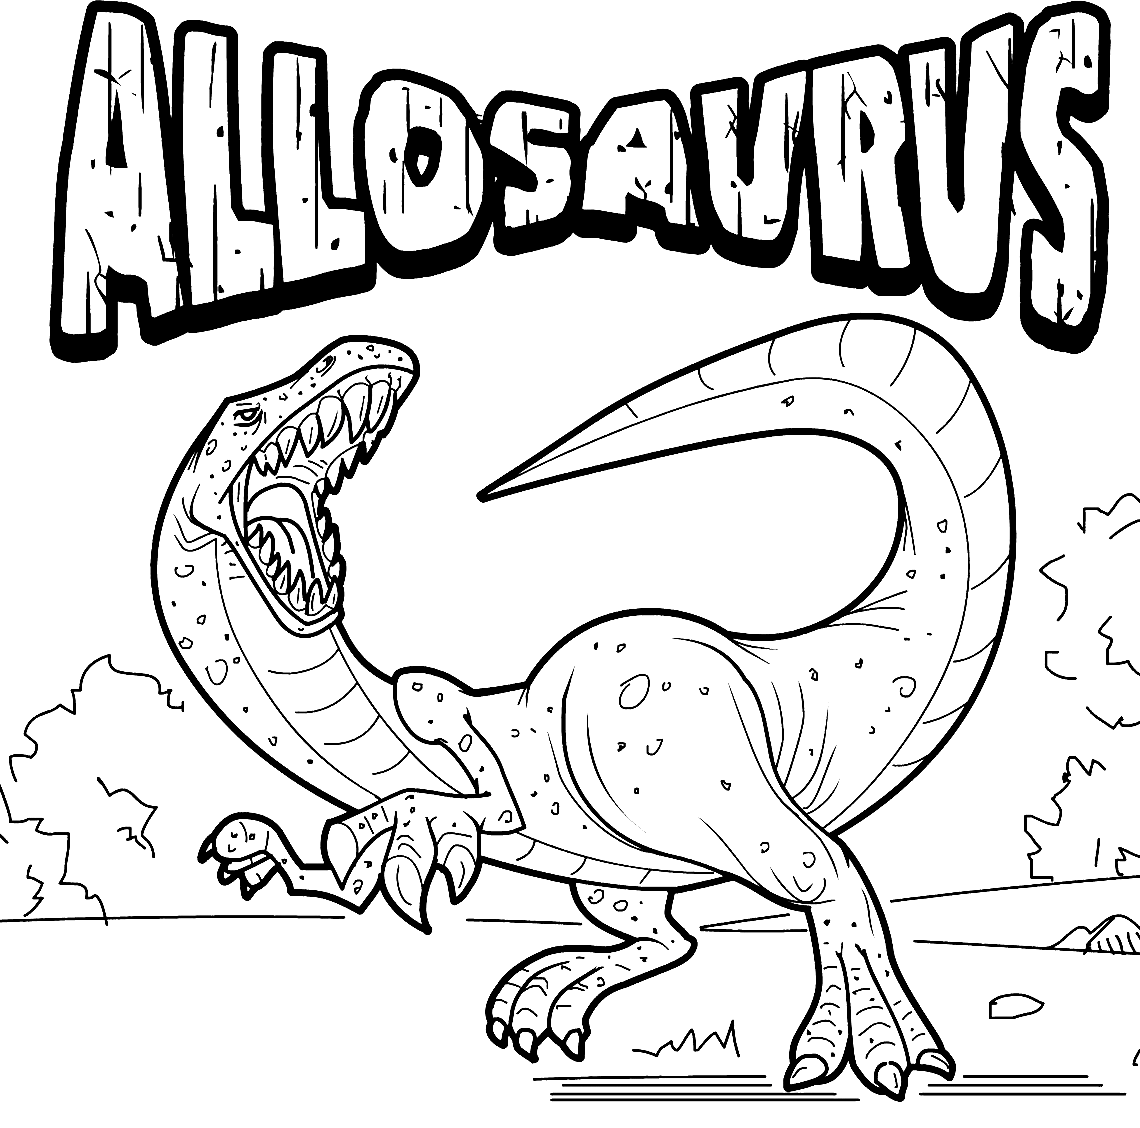 Allosaurus Dinosaur 1 Coloring Page. صفحة التلوين